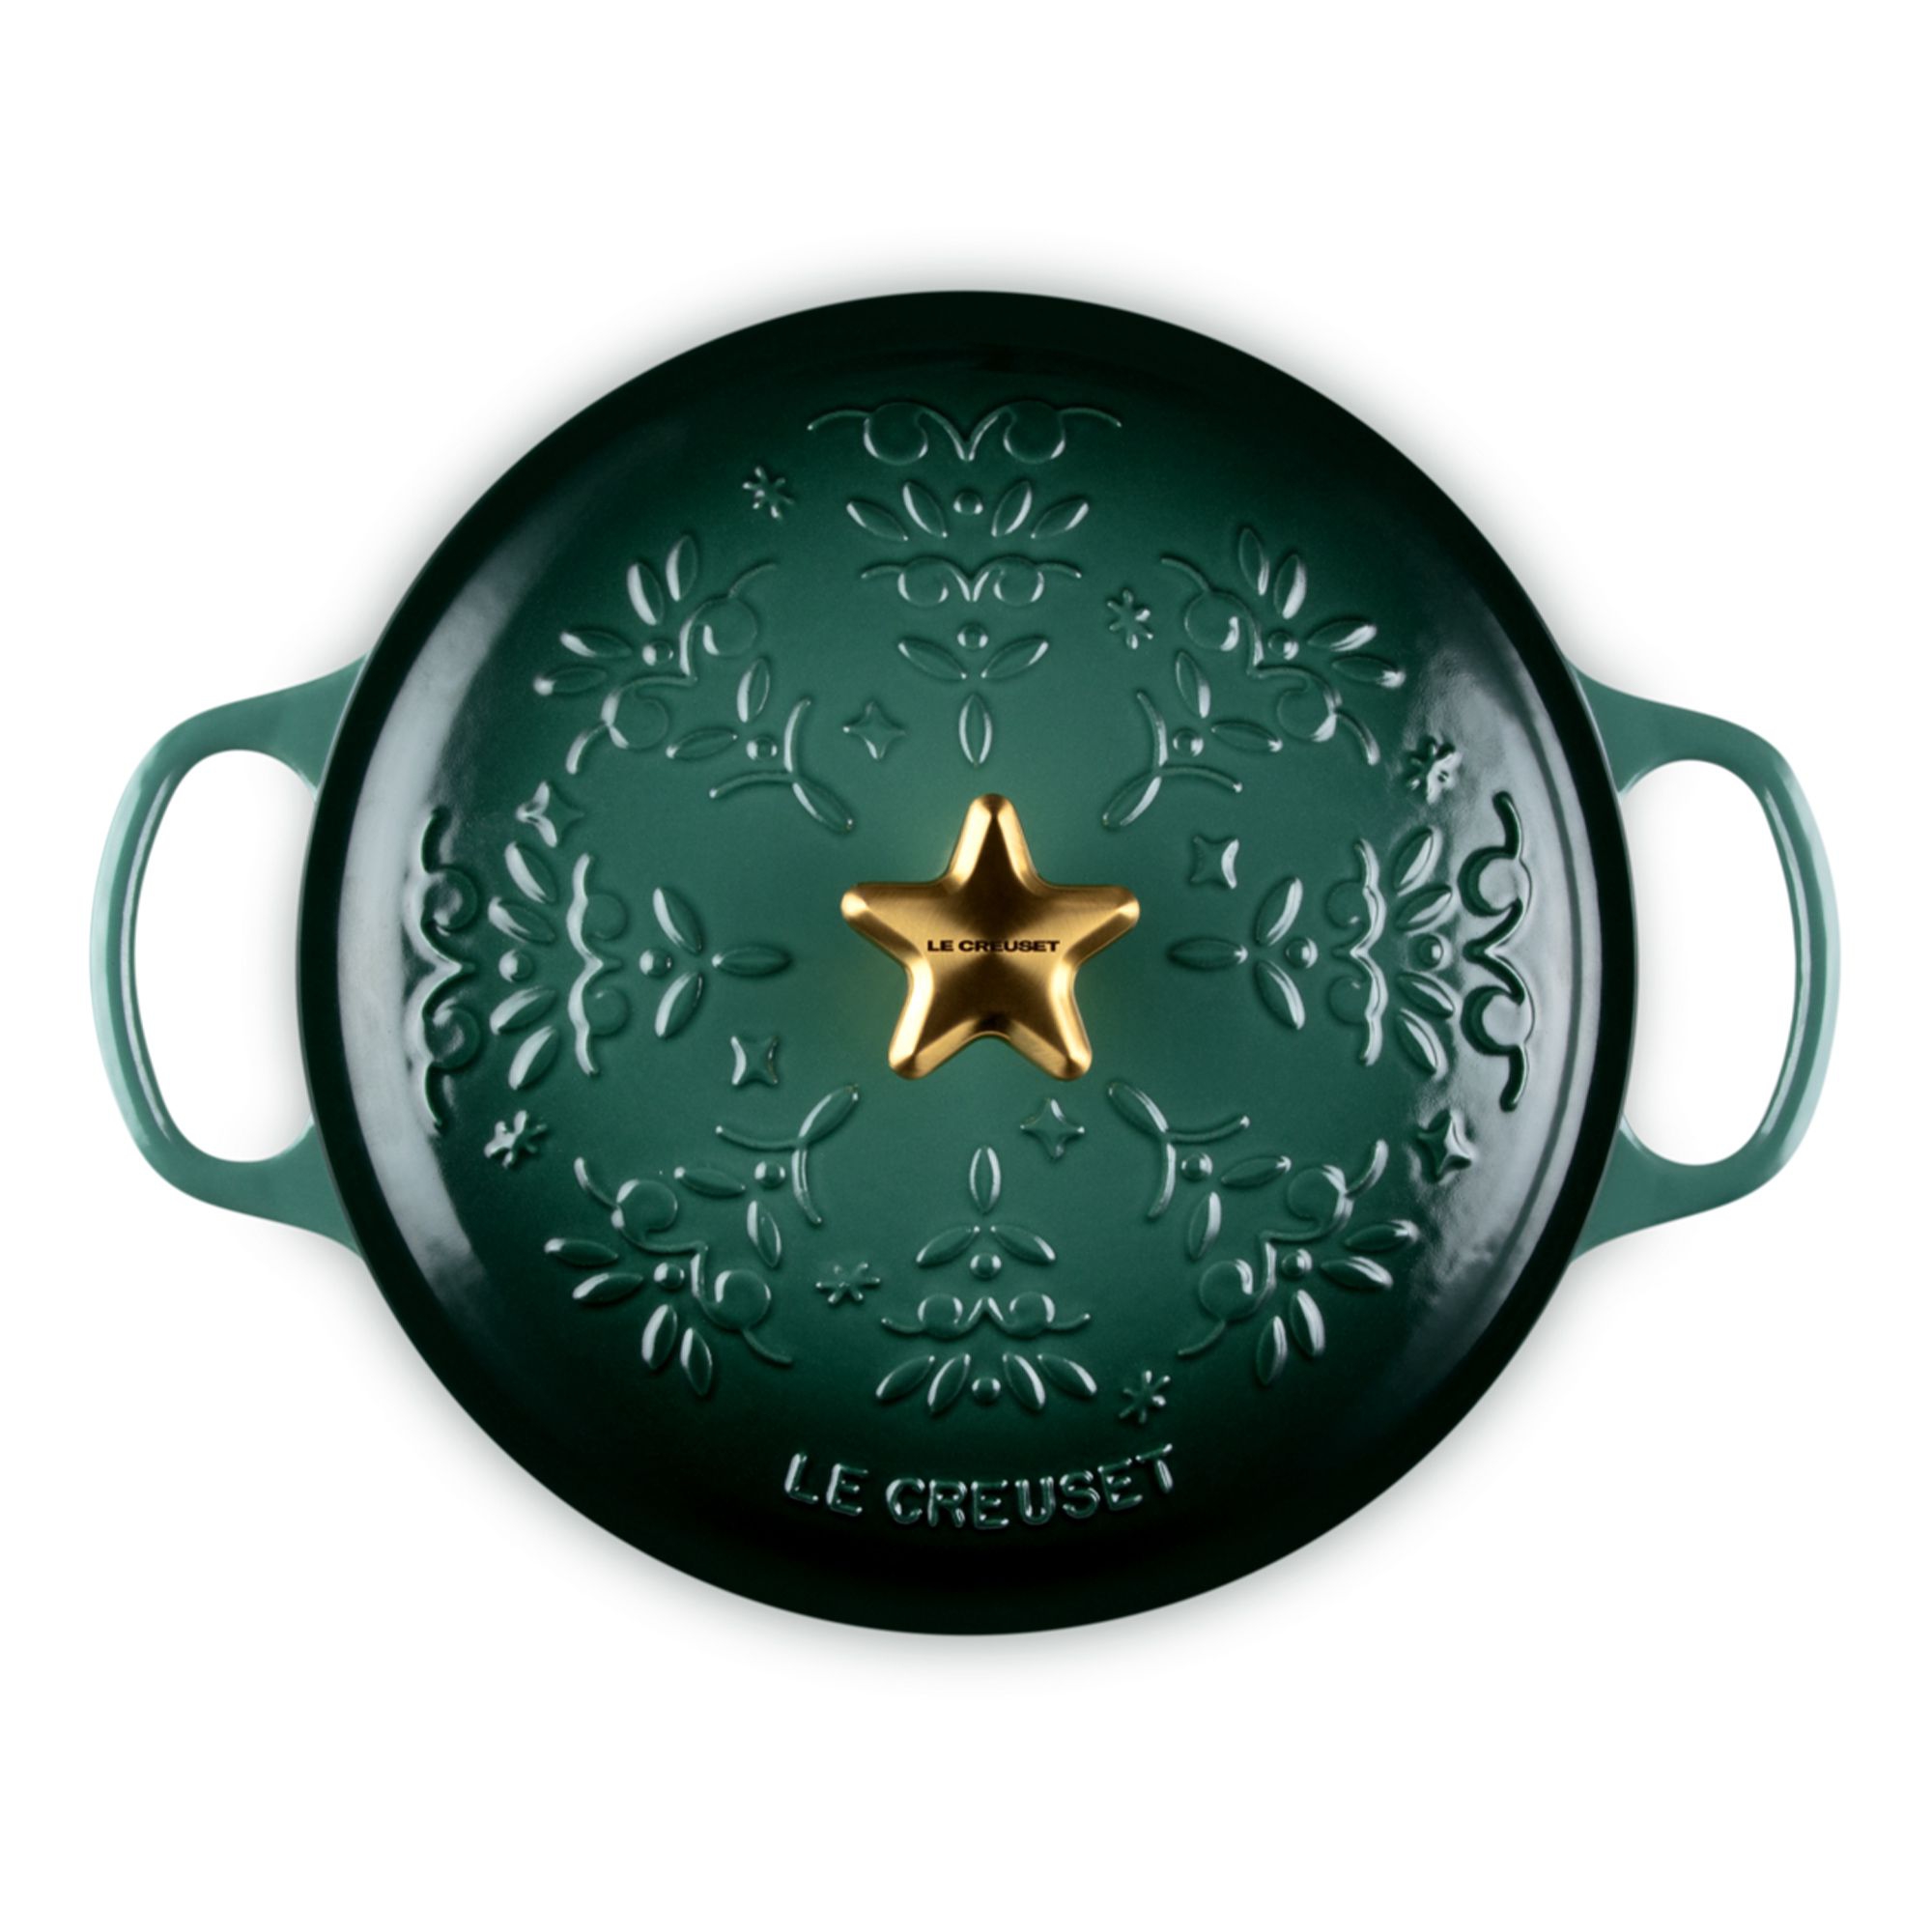 Le Creuset - Cast Iron Christmas Round Casserole with Gold Star Knob 24 cm